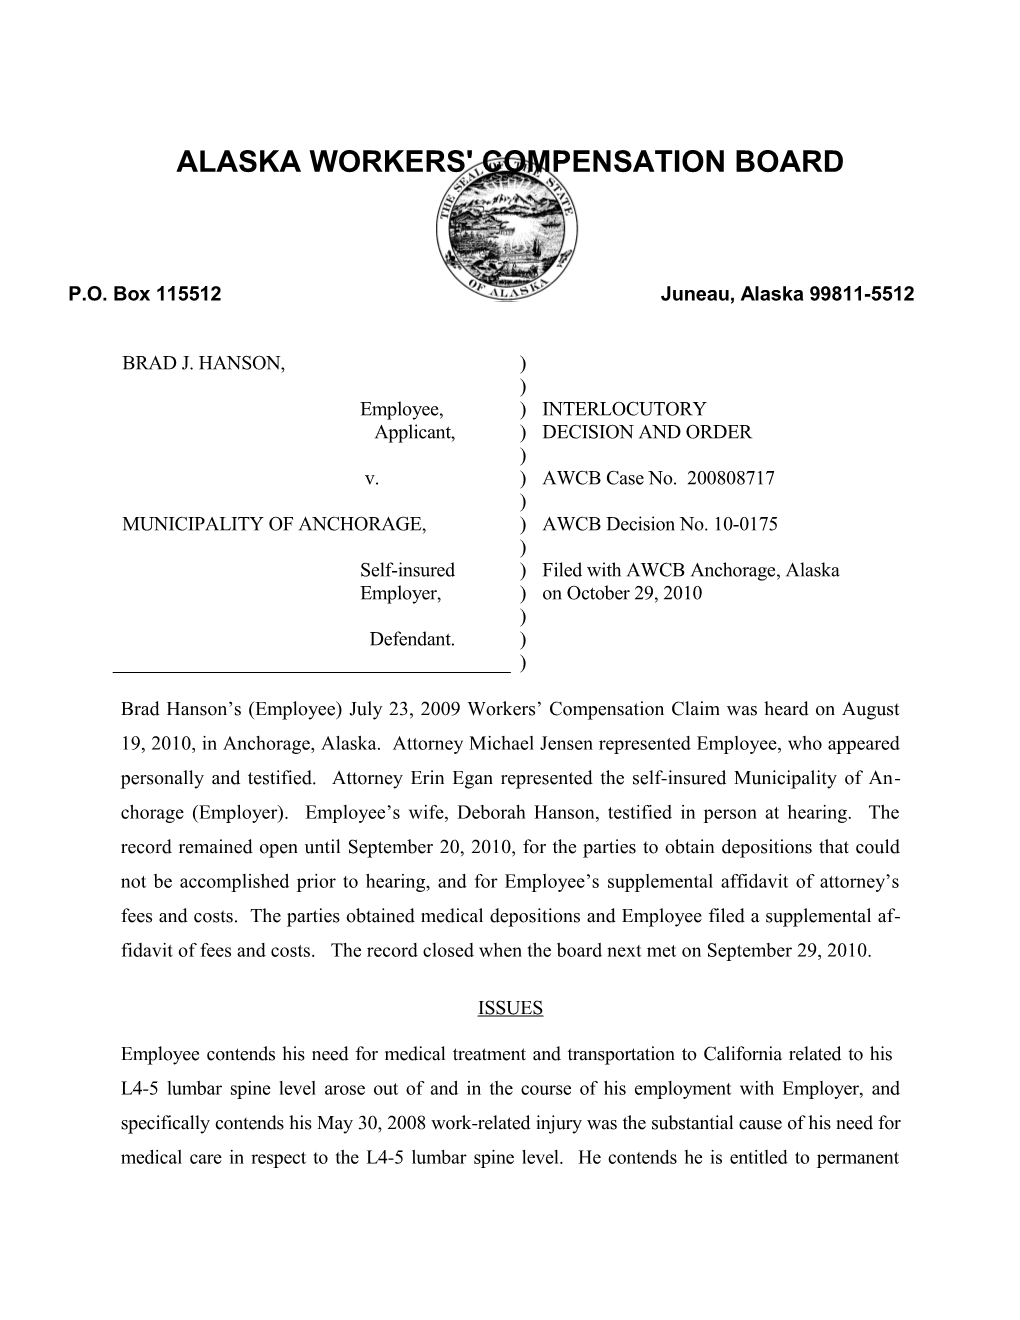 Alaska Workers' Compensation Board s27